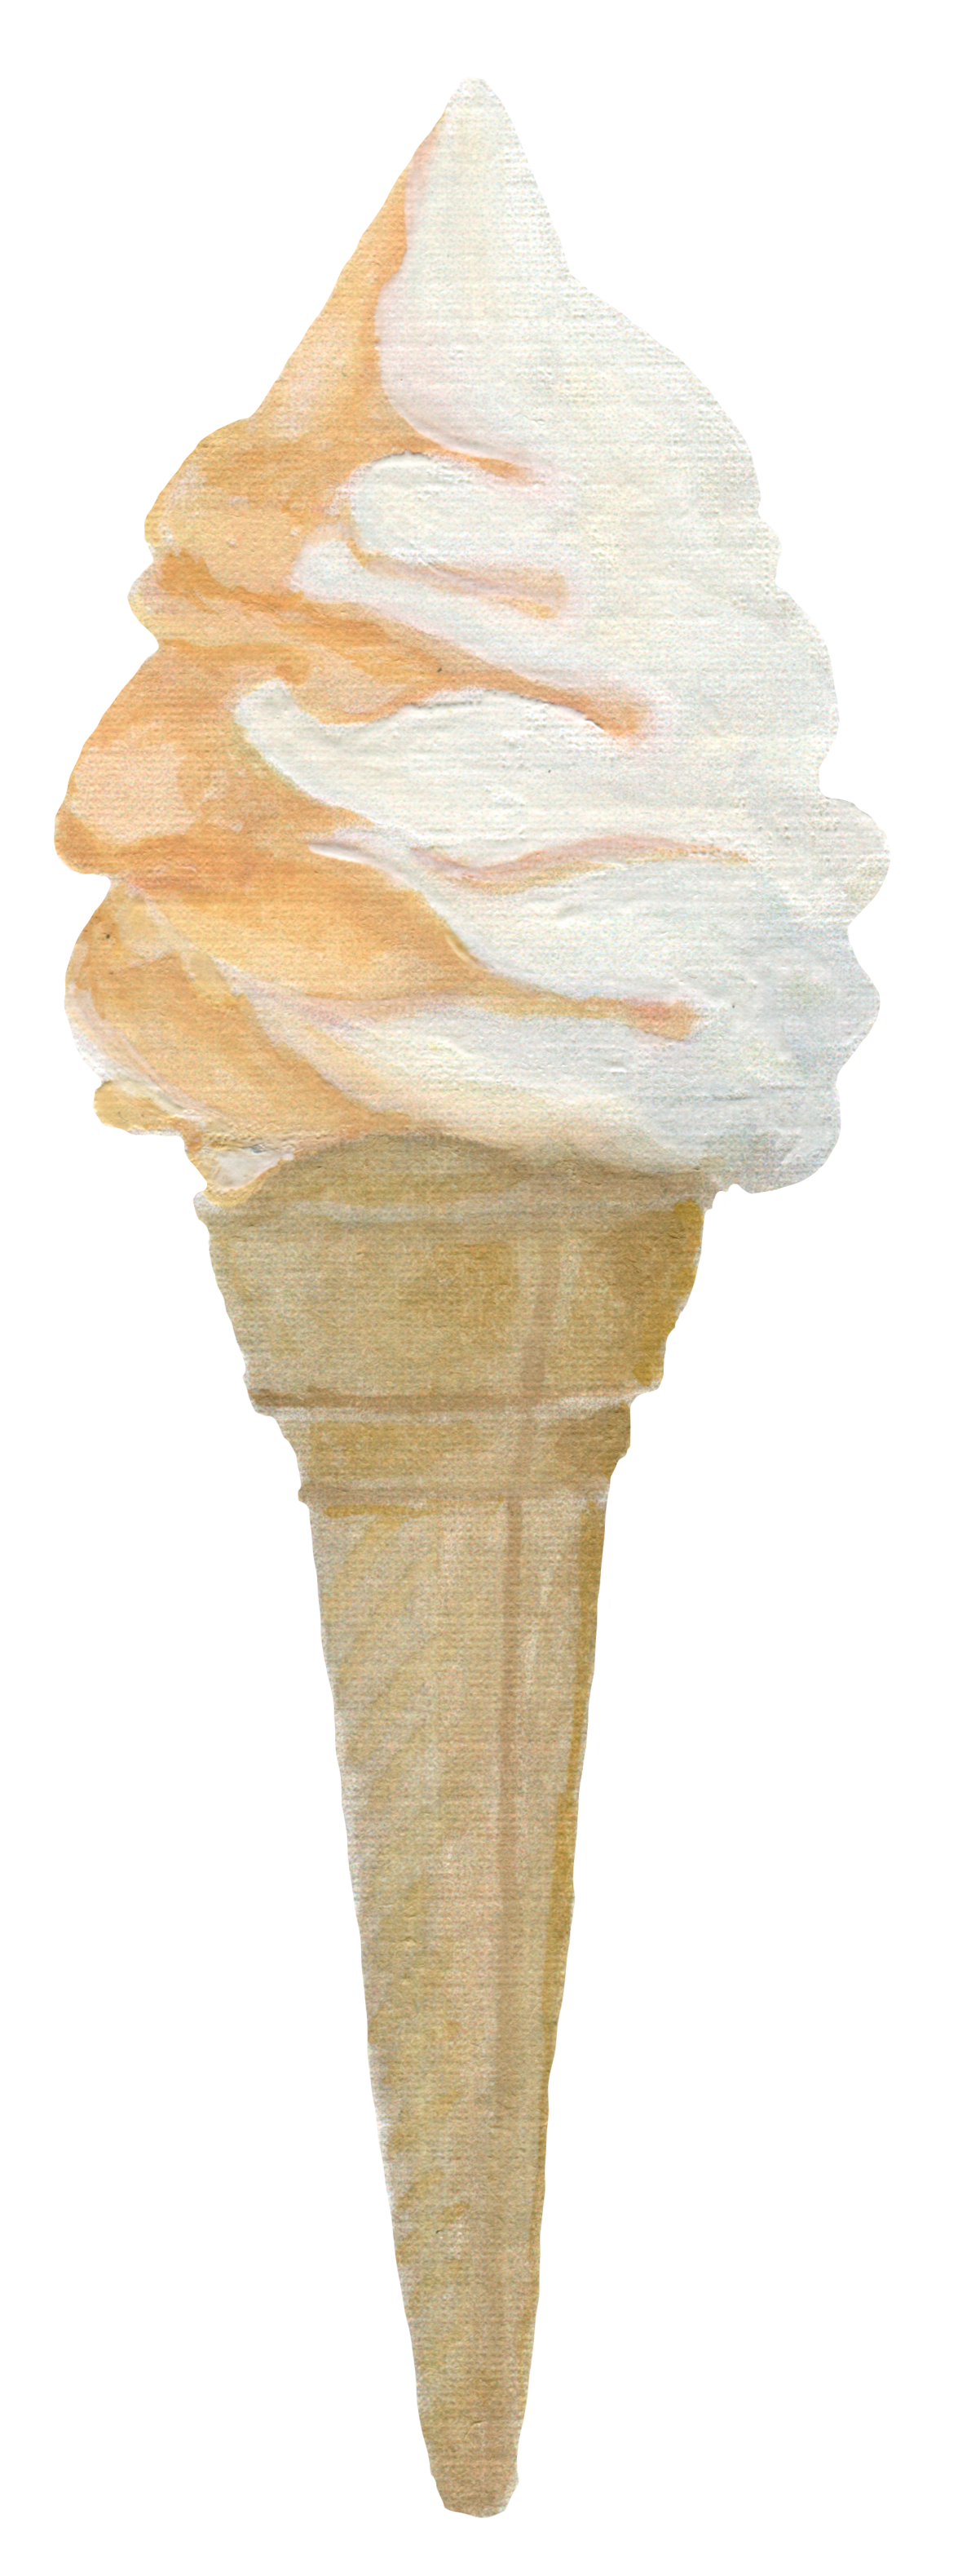 Creamsicle Ice Cream downloadable artwork